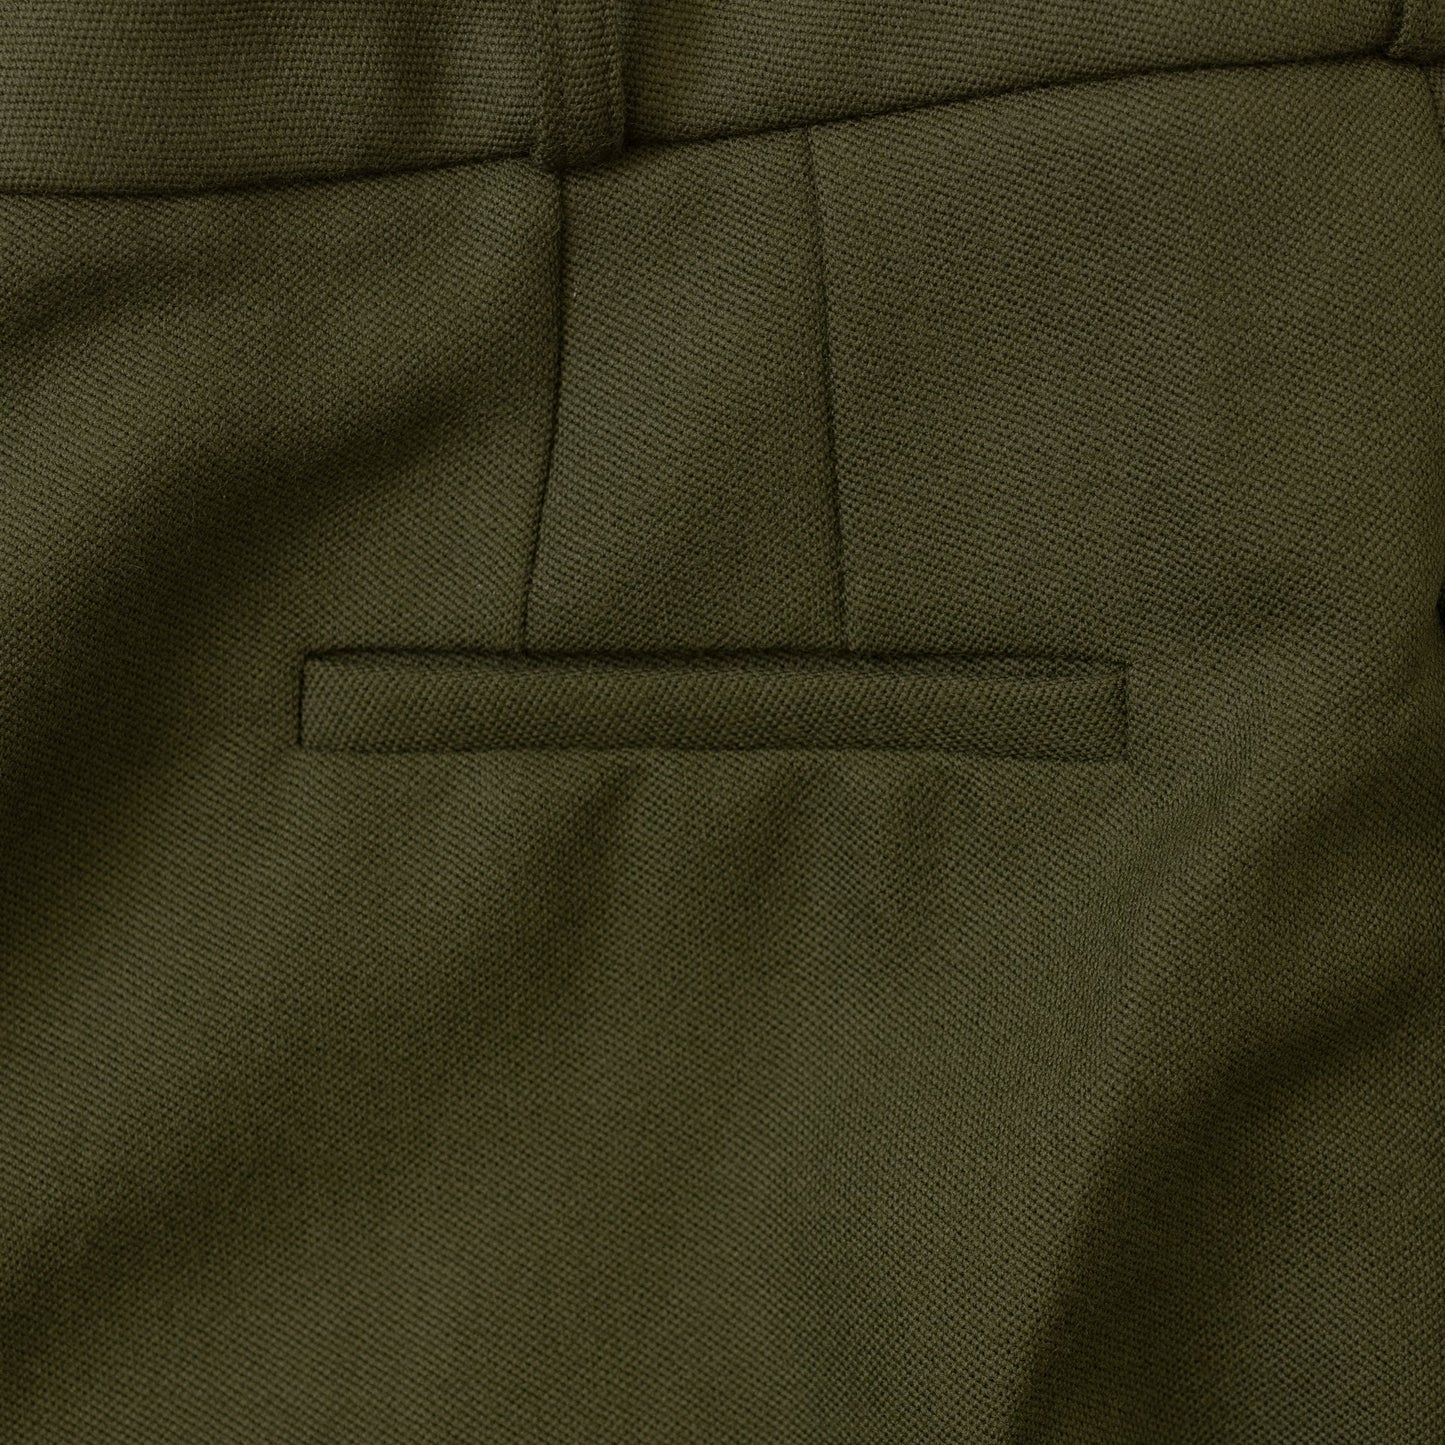 Dunkeld pant - khaki Trousers BEARCO